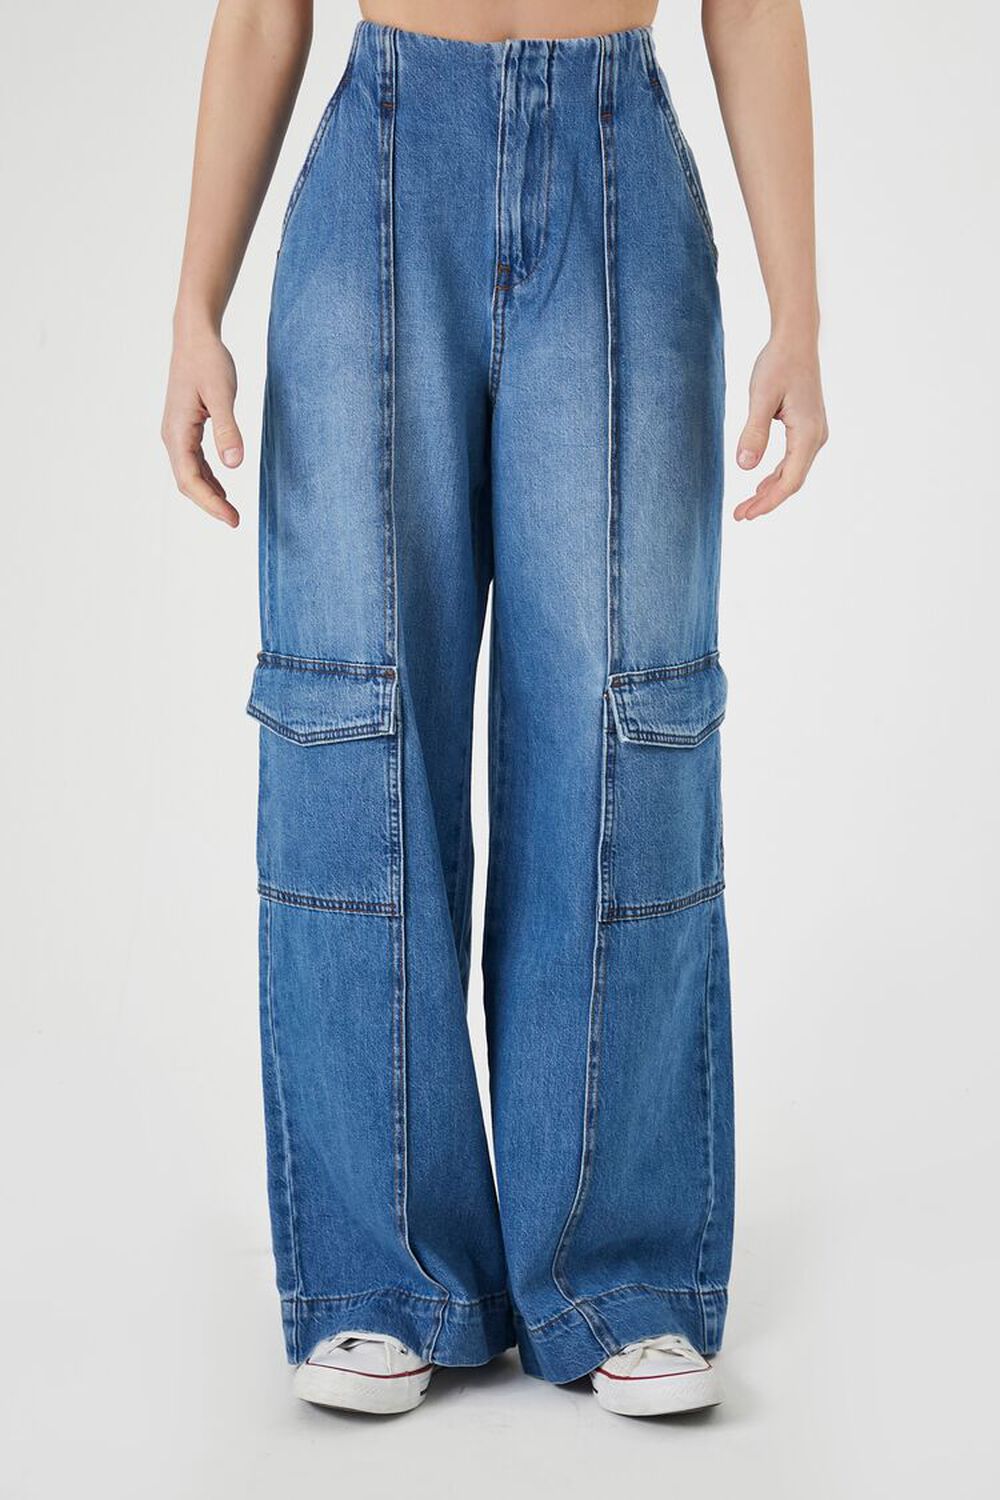 DARK DENIM High-Rise Wide-Leg Cargo Jeans, image 1